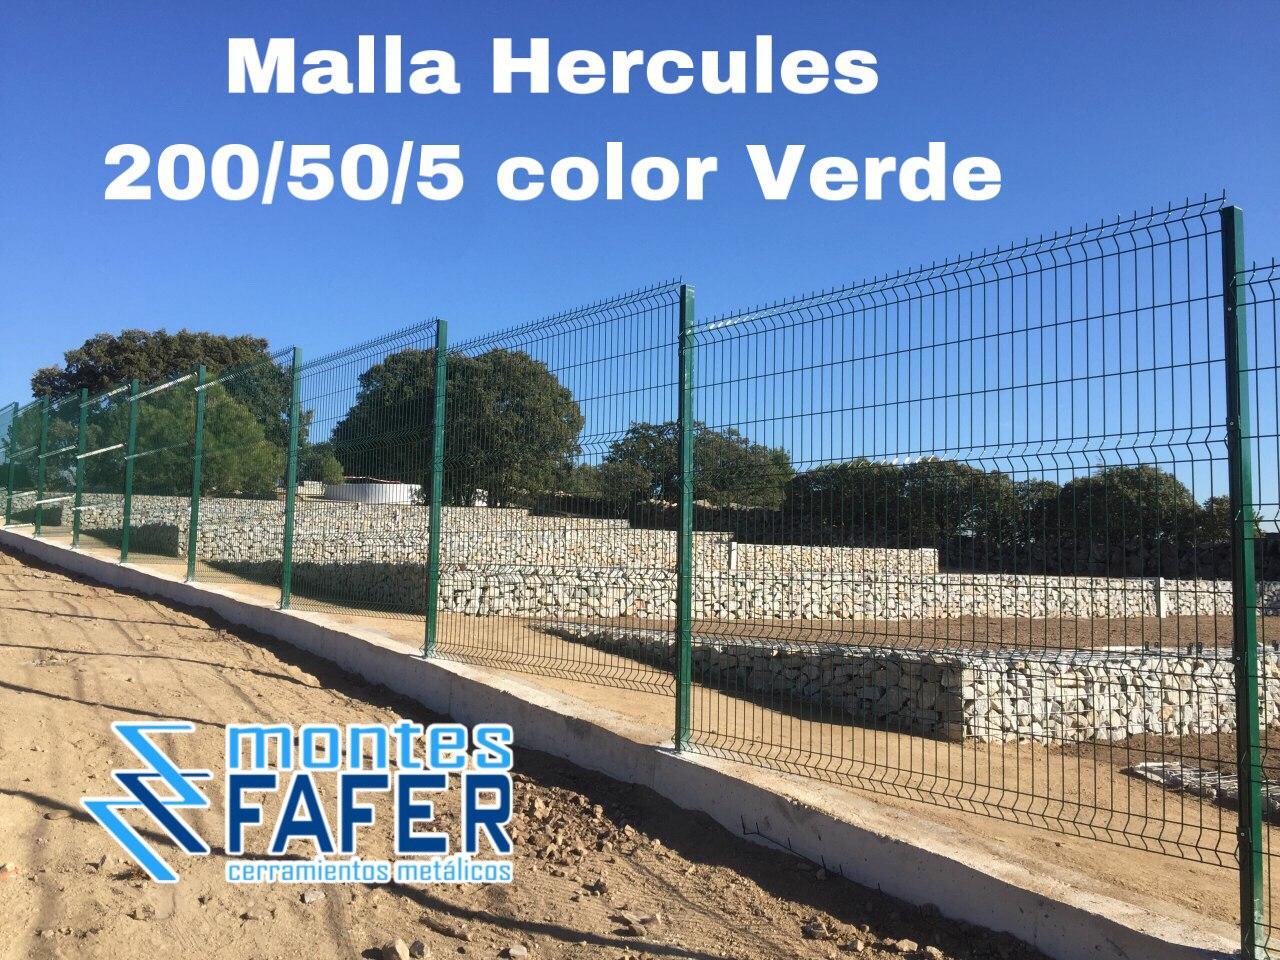 Malla hercules 200/50/5 verde MontesFafer